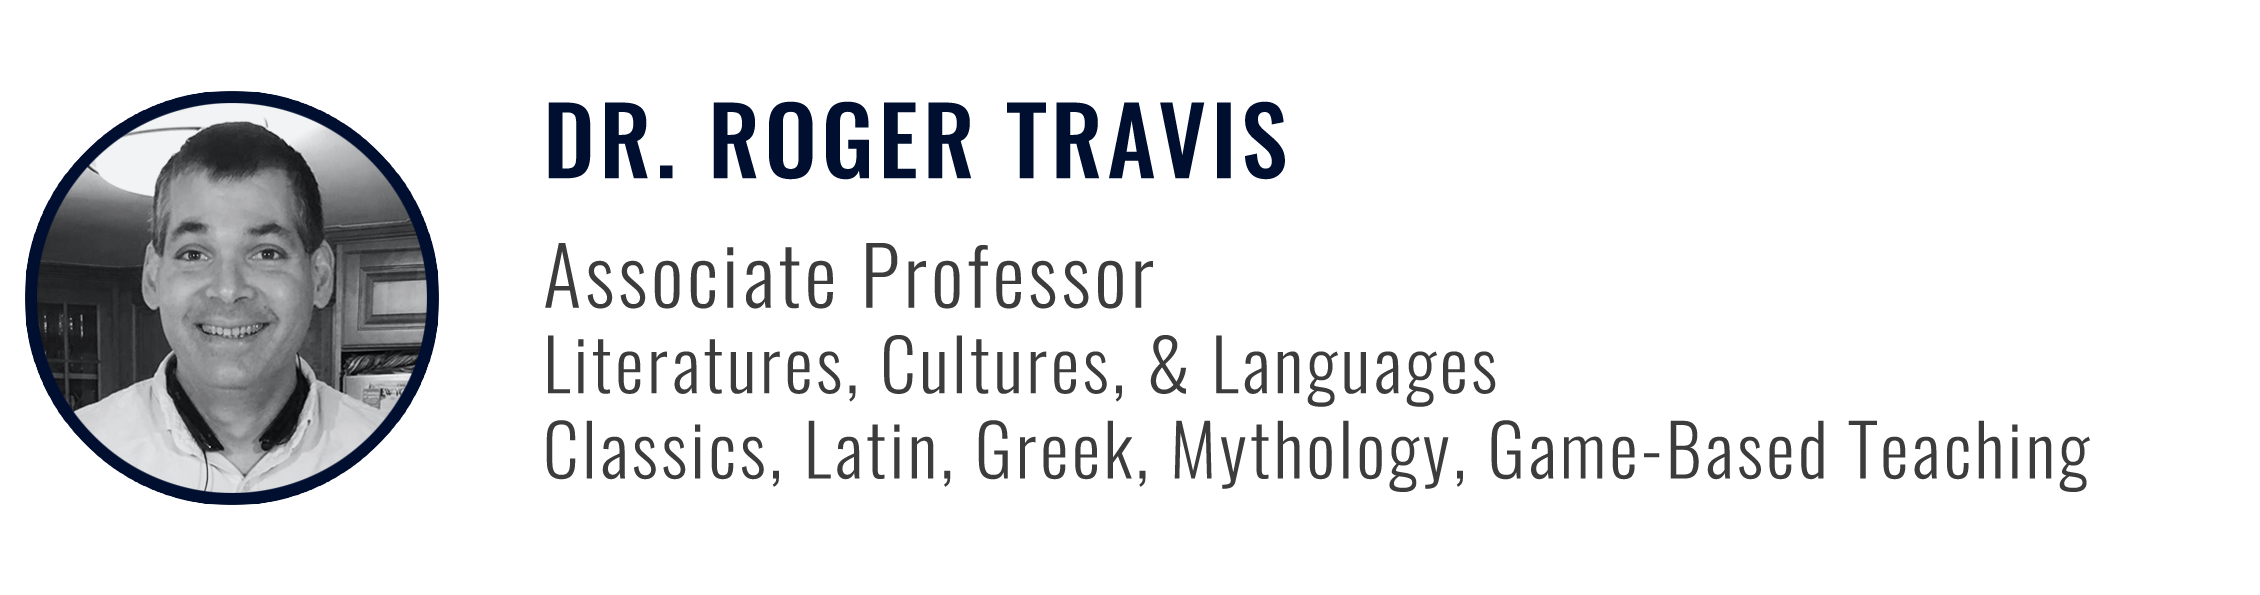 Dr. Roger Travis, Asso. Prof. Literatures, Cultures, & Languages